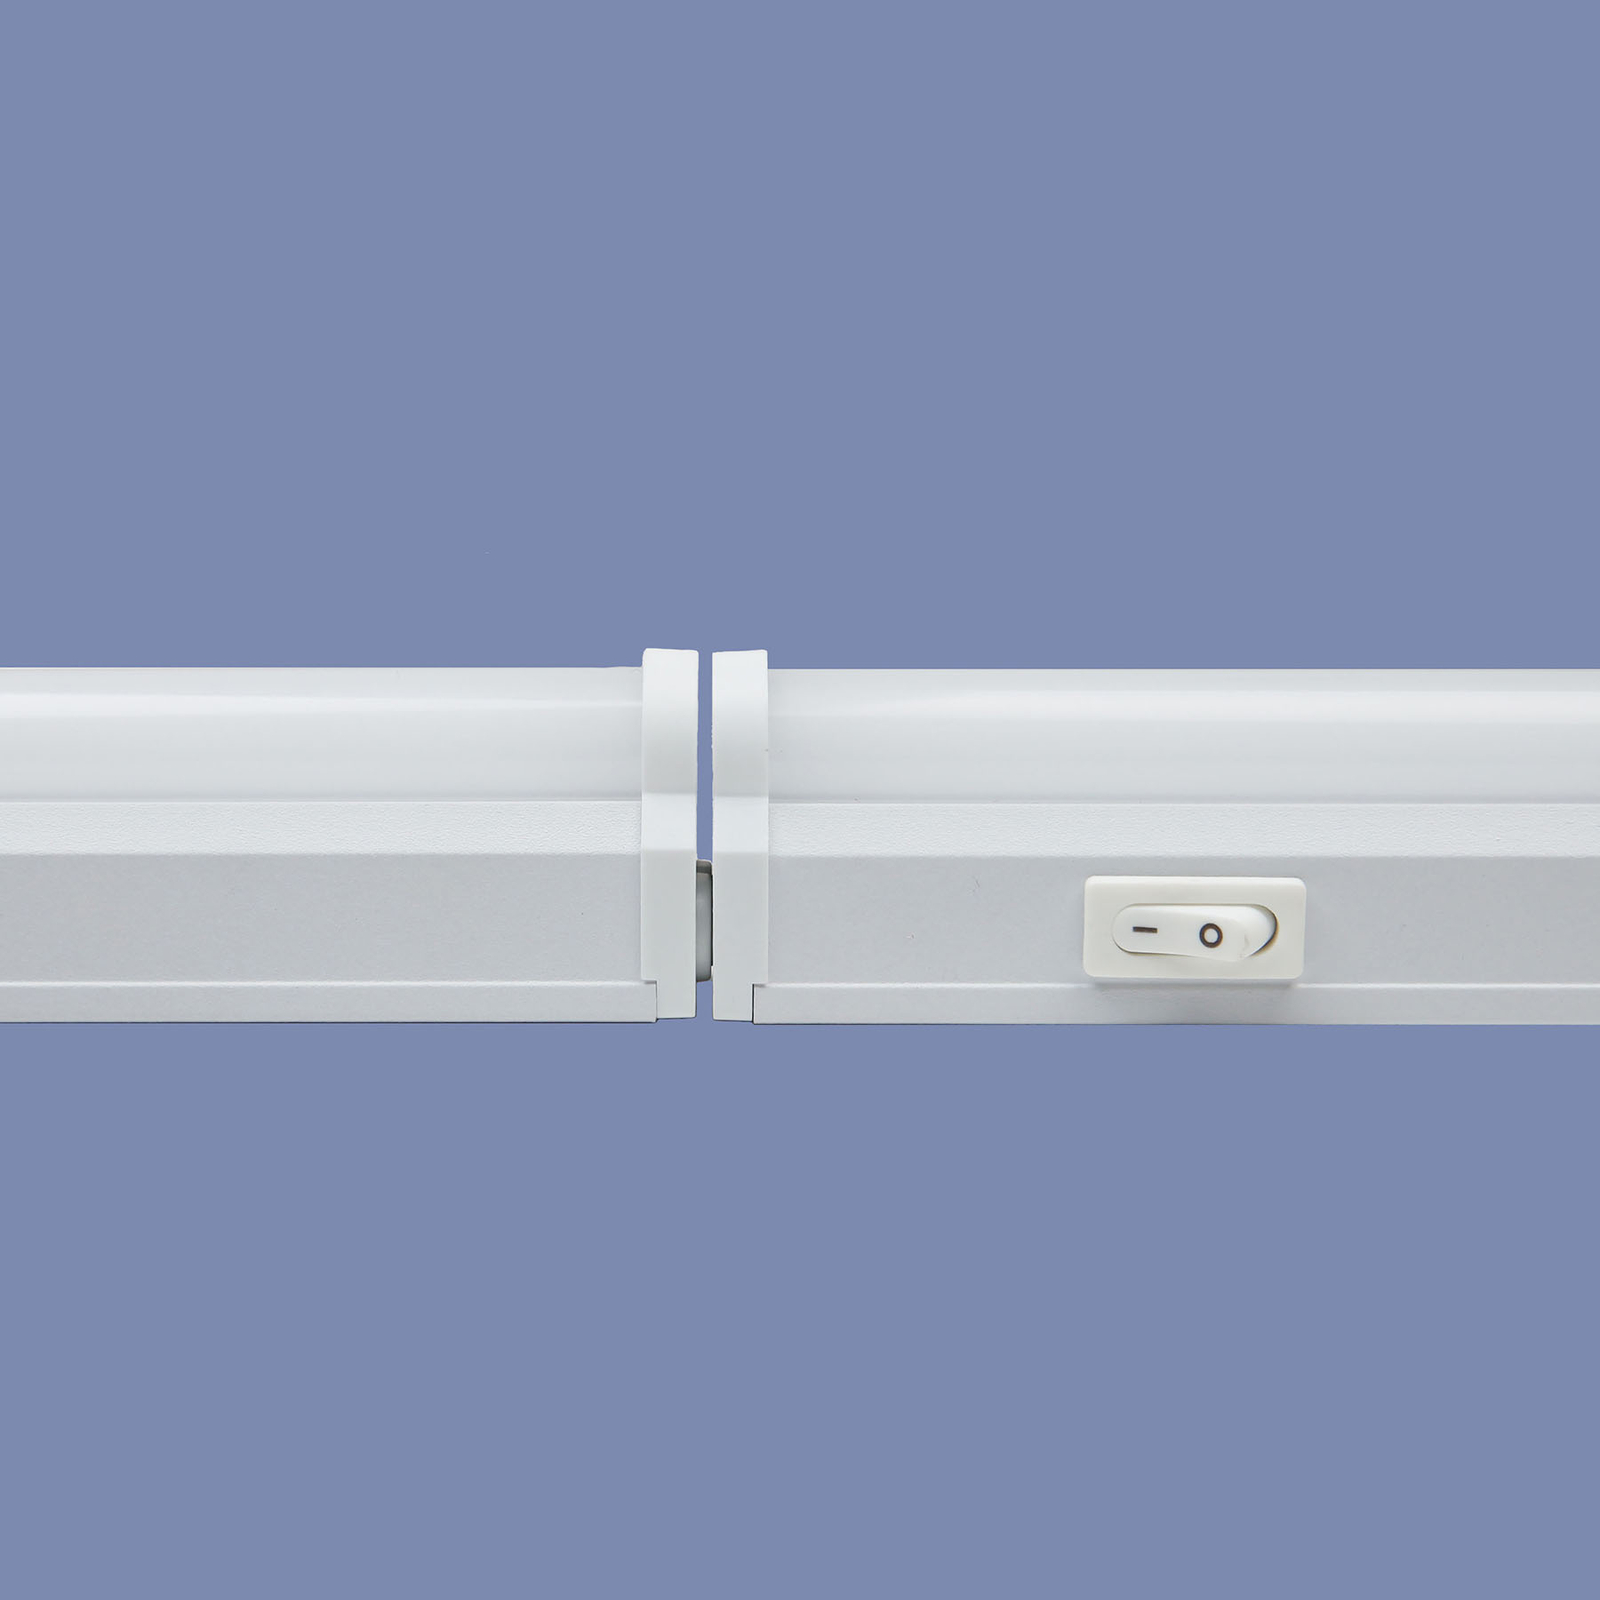 LED-lichtband 982, lengte 31,5 cm